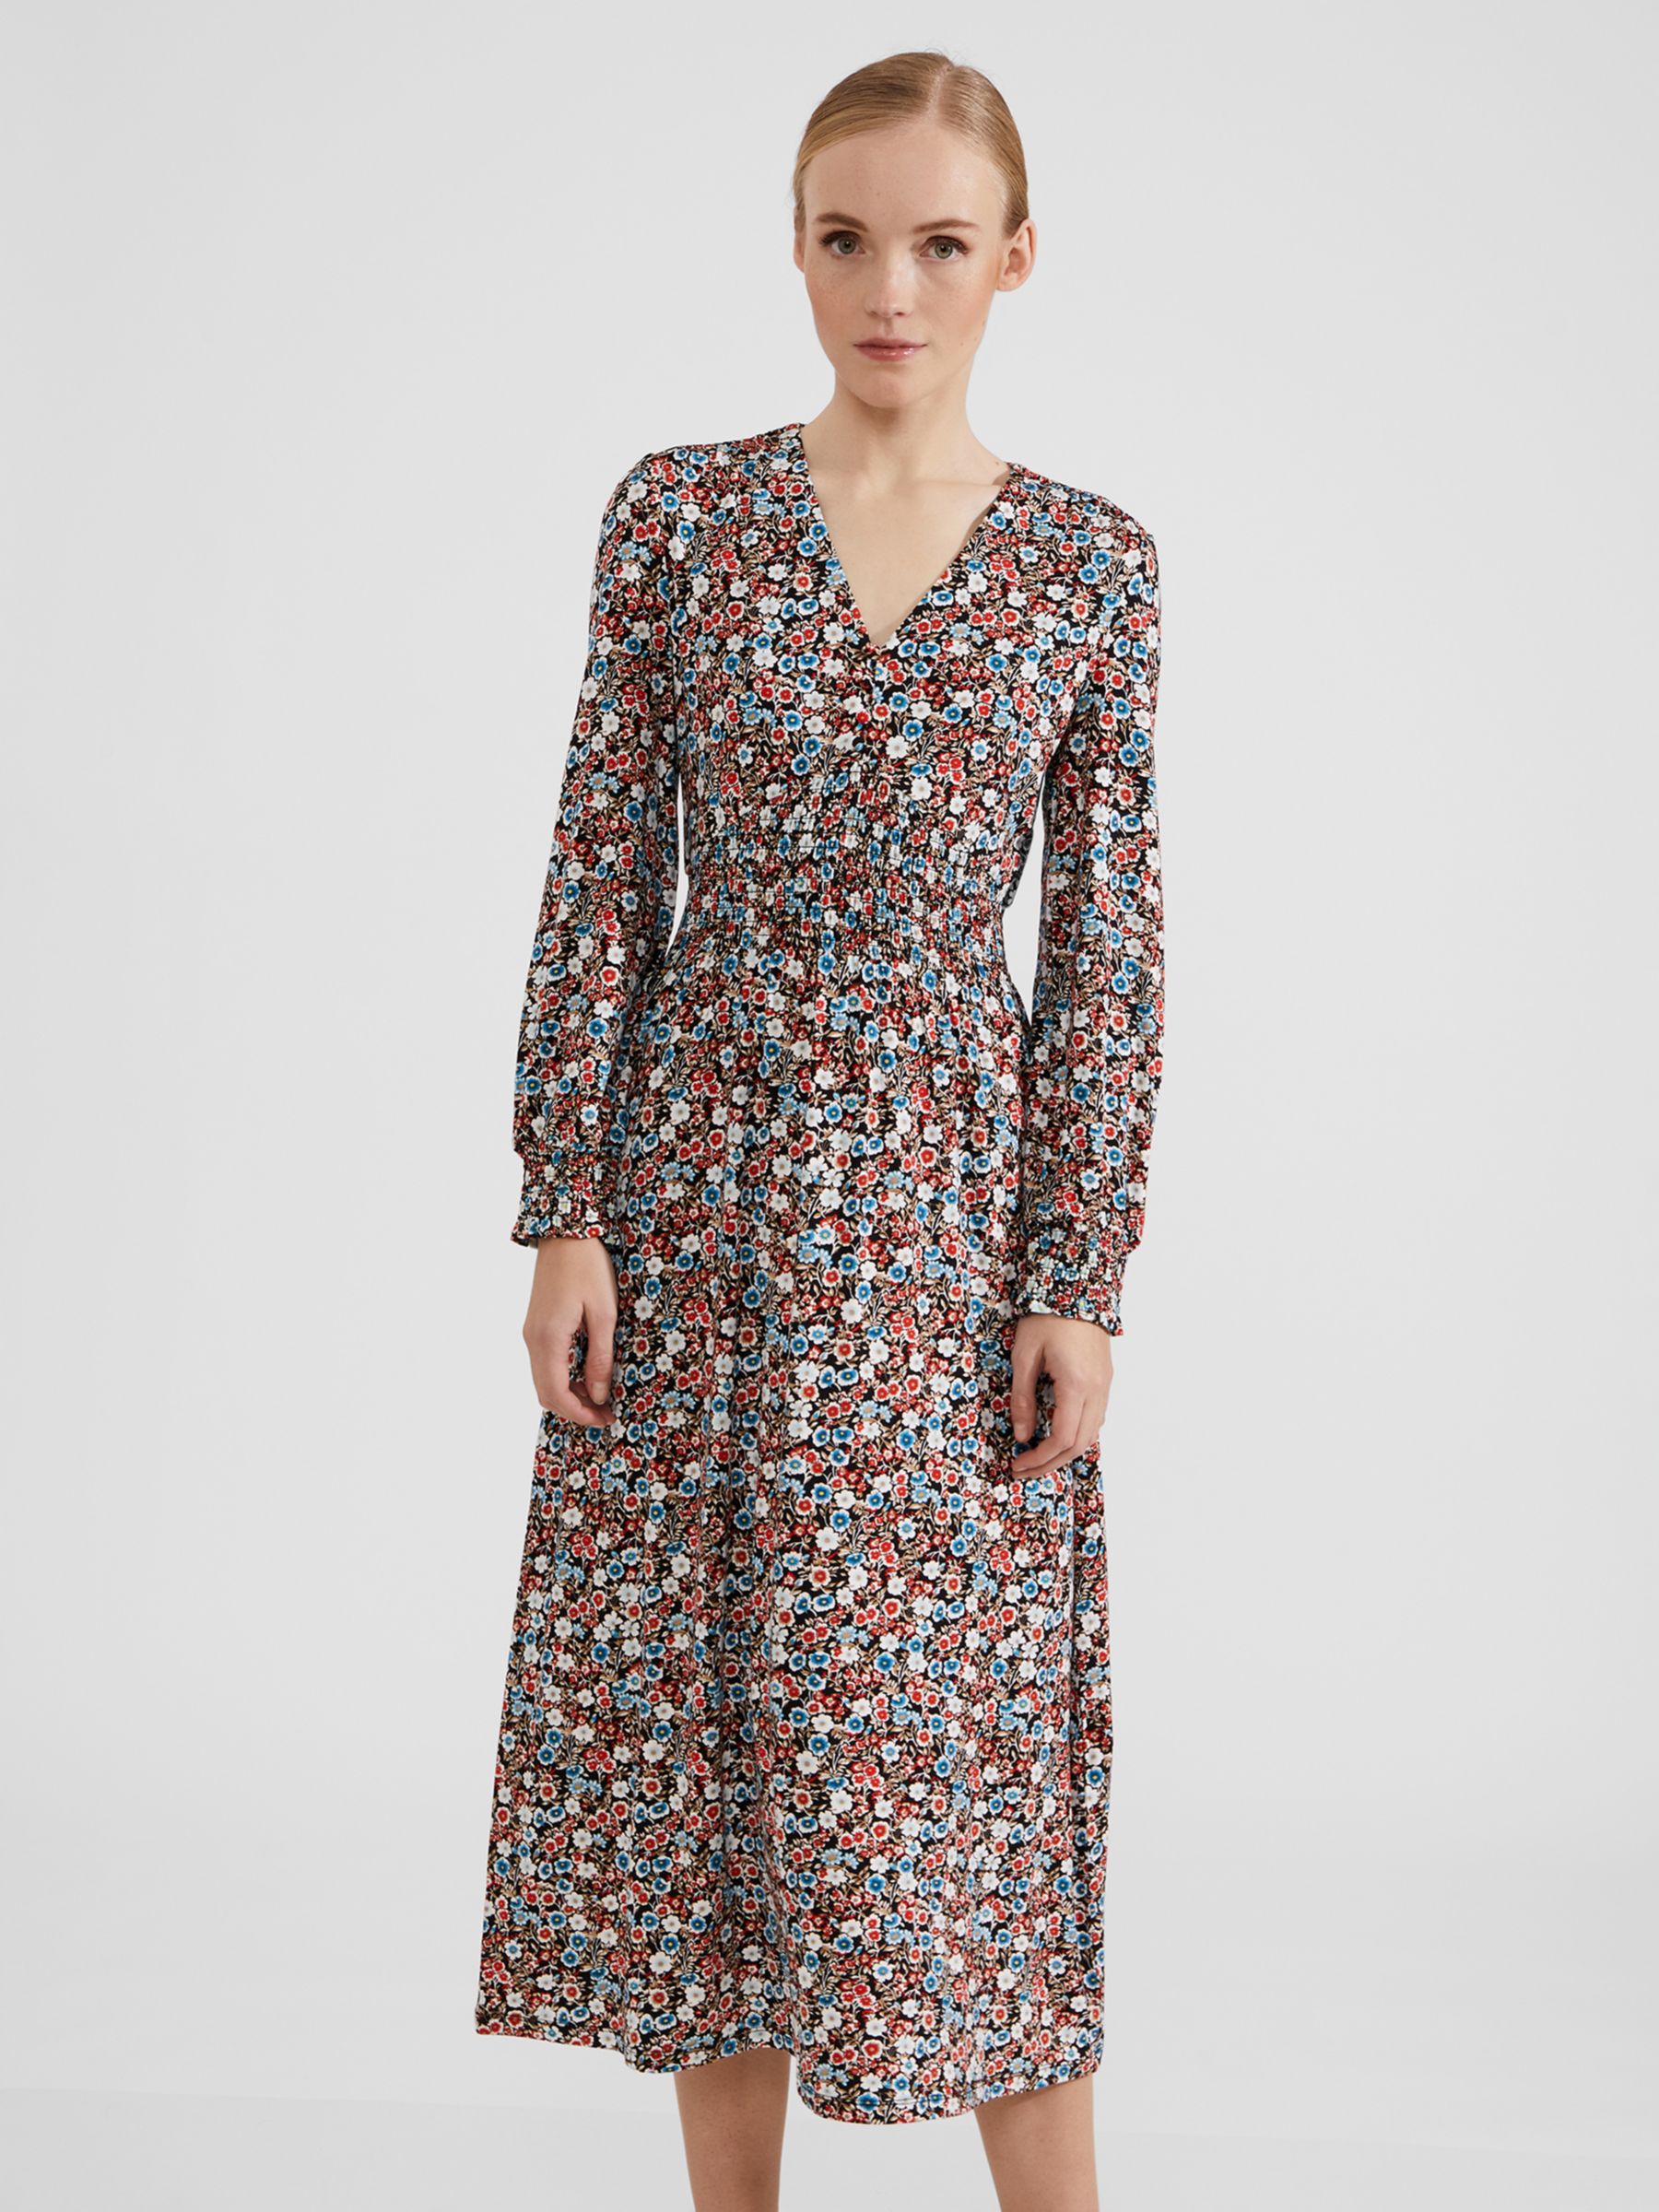 Hobbs Maddy Floral Print Jersey Midi Dress, Multi at John Lewis & Partners